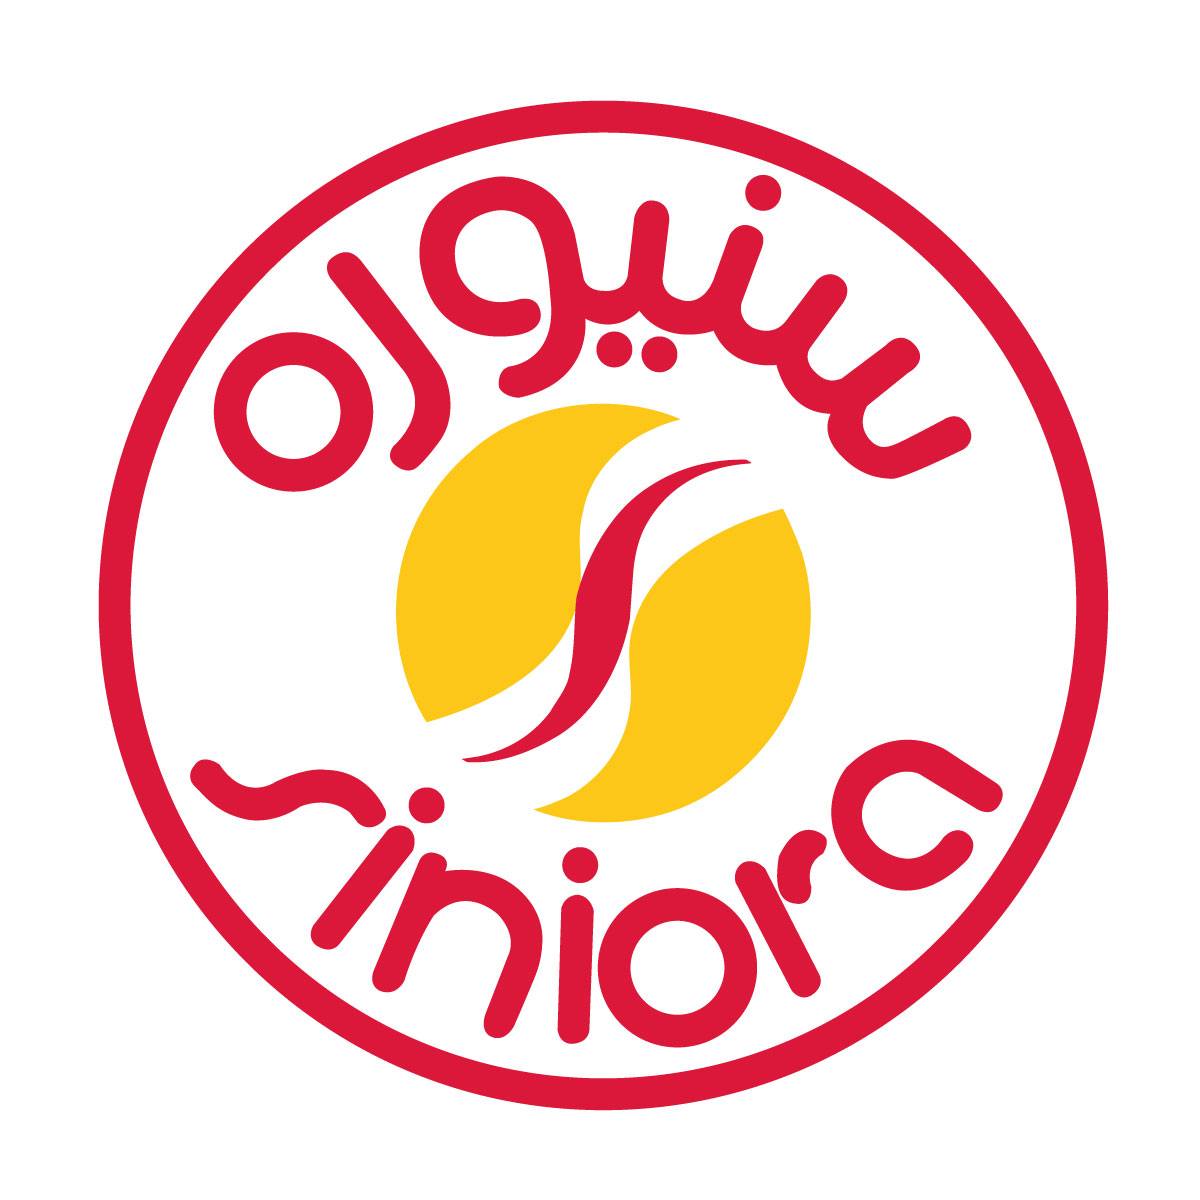 Siniora Food Industries